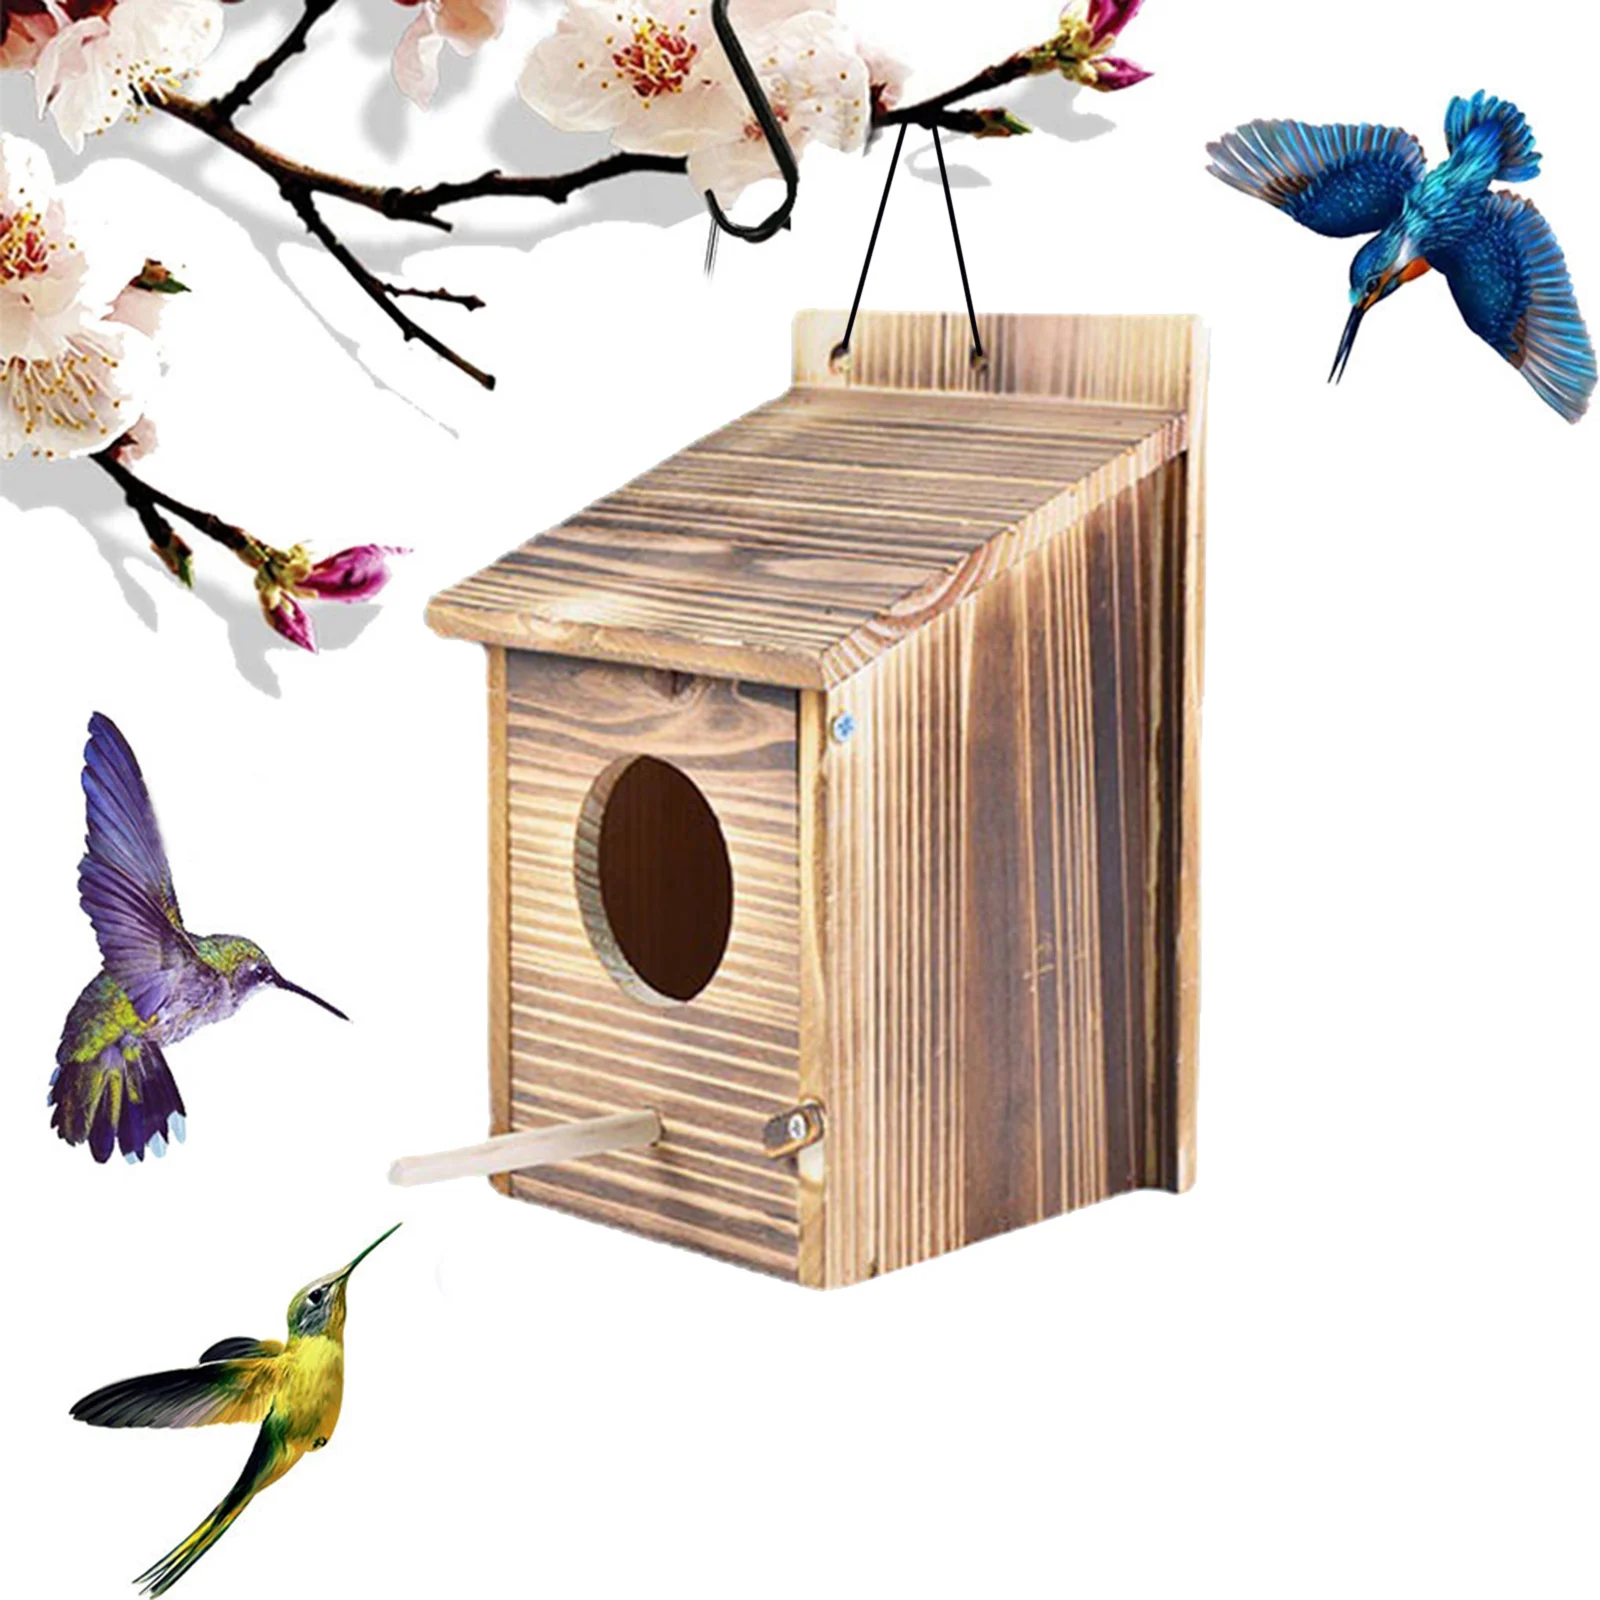 Wood Outdoor Garden Bird House Wall / Tree Mounted Bird Sleeping Nesting Hatching Hut Box